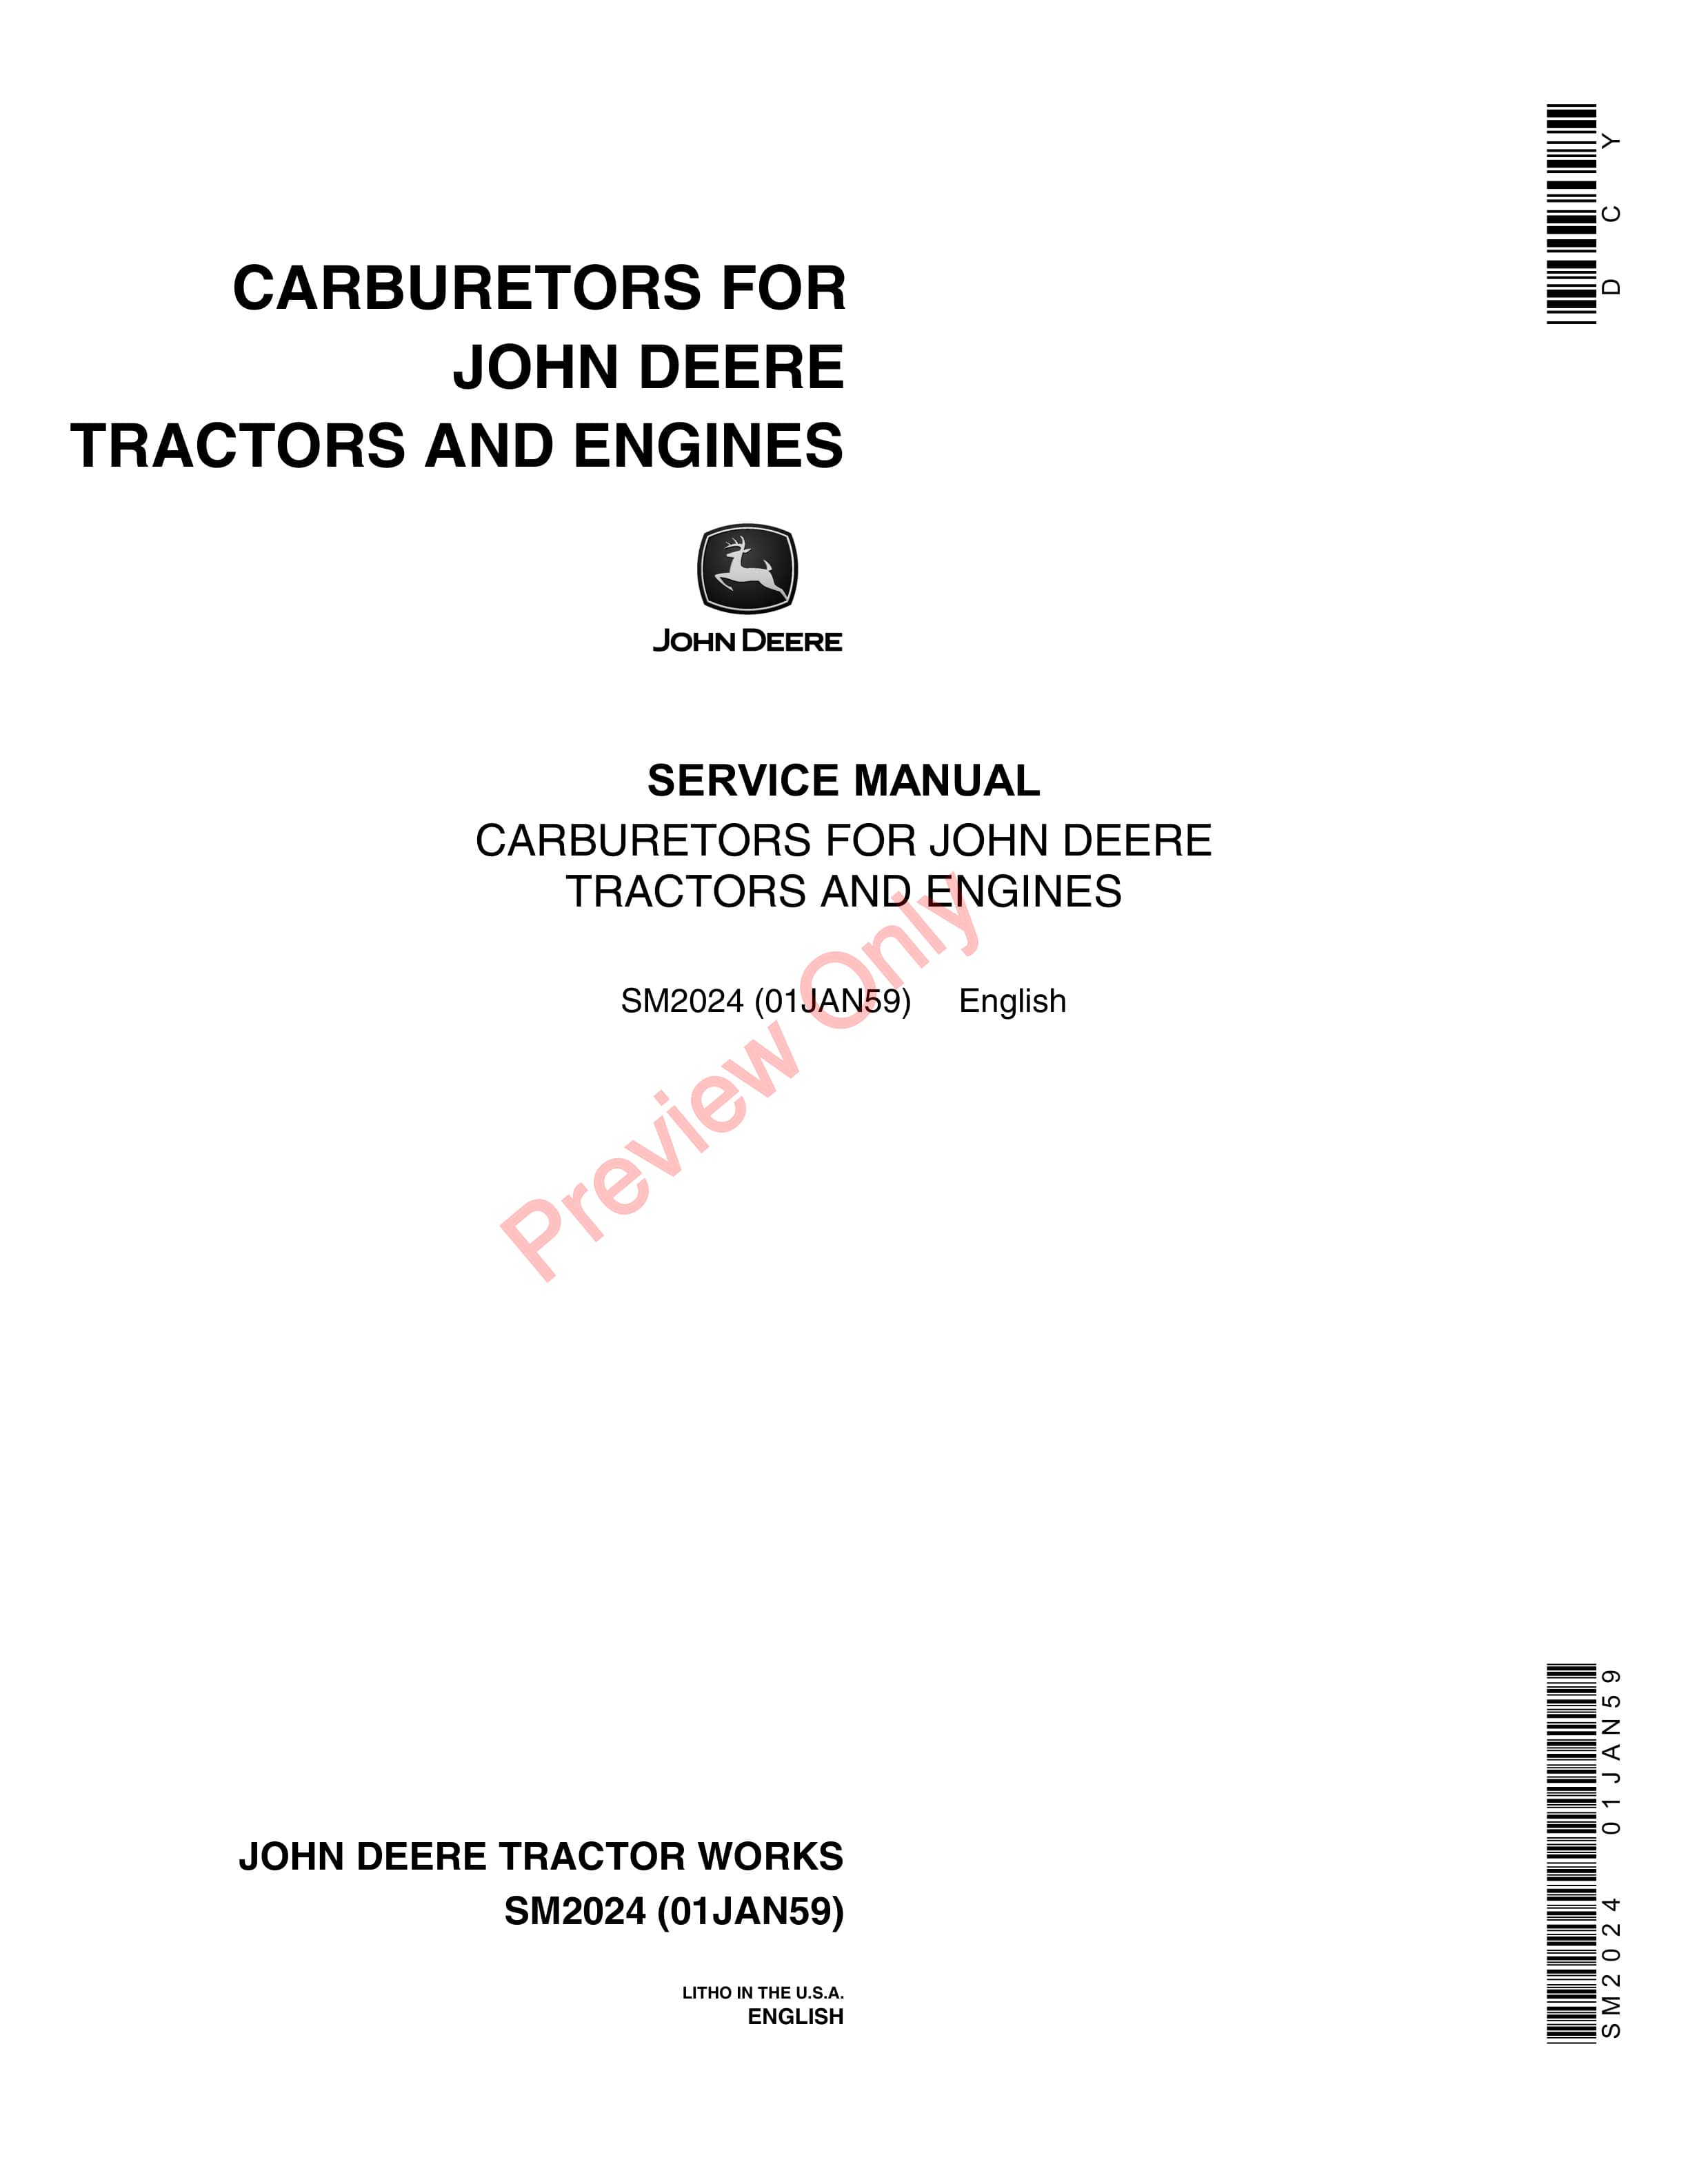 John Deere Tractors and Engines Service Manual SM2024 01JAN59-1